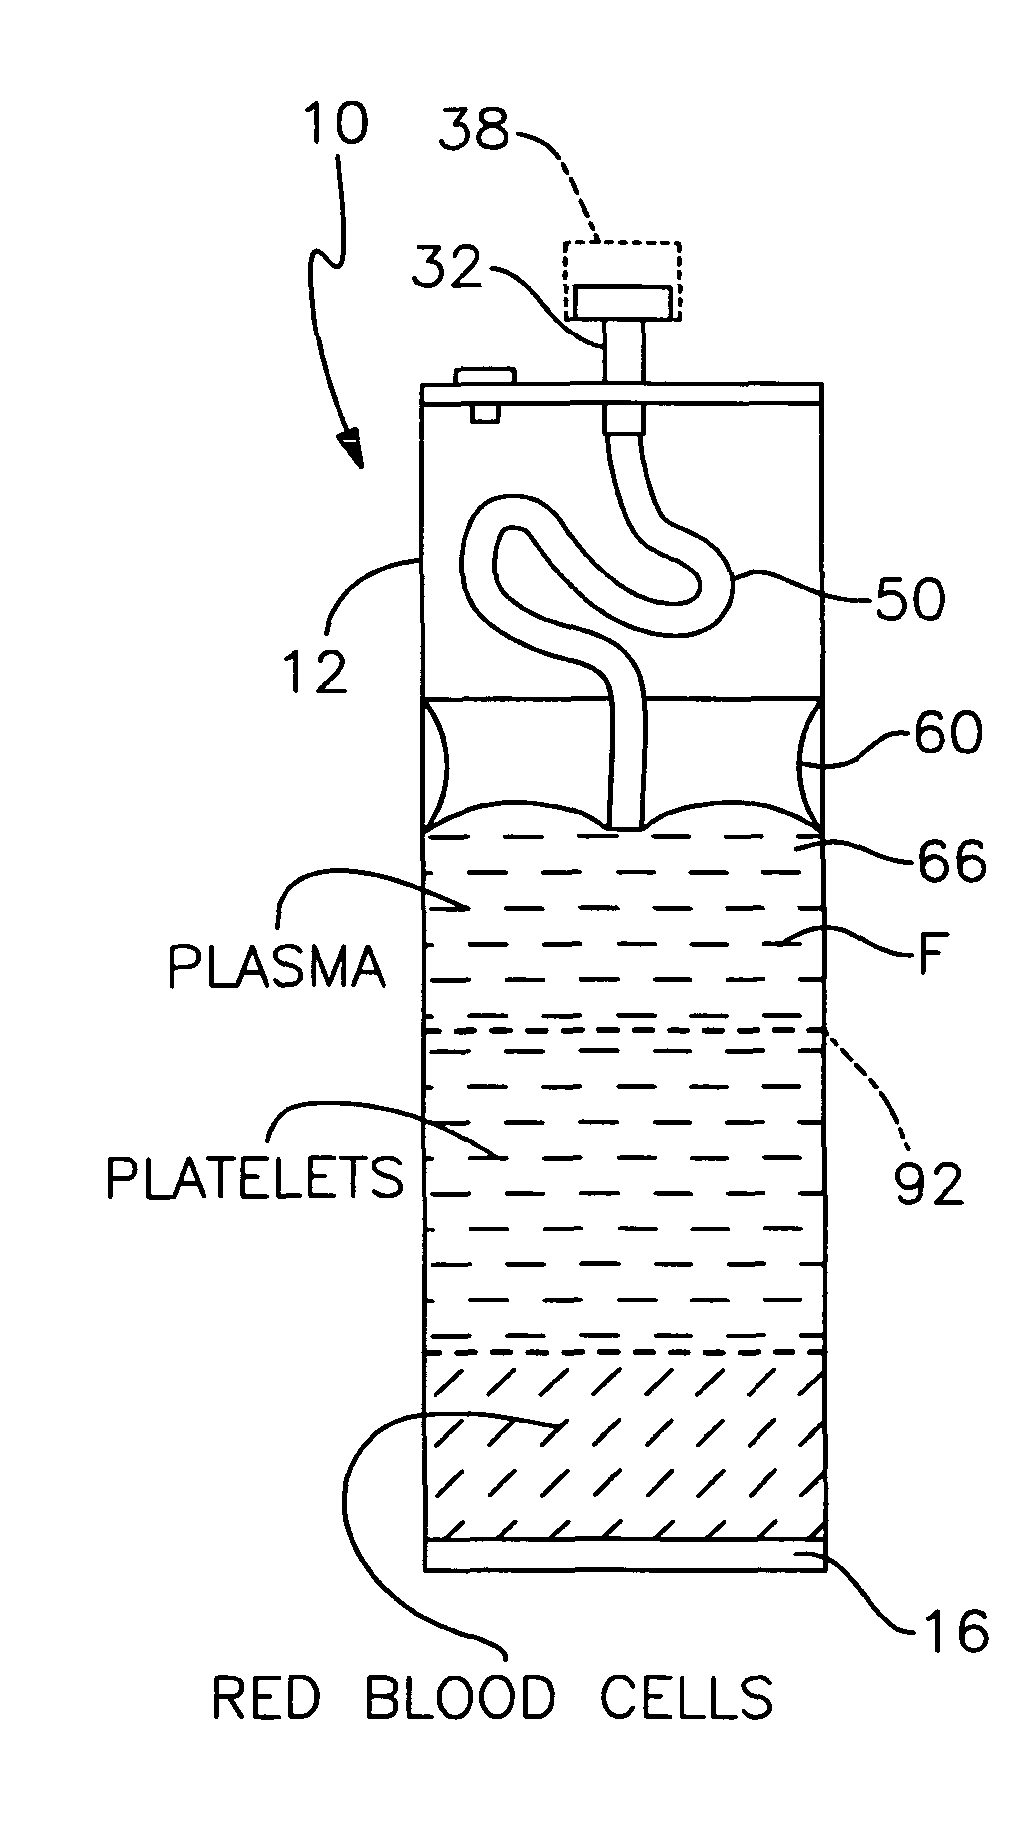 Centrifuge tube for separating and aspirating biological components